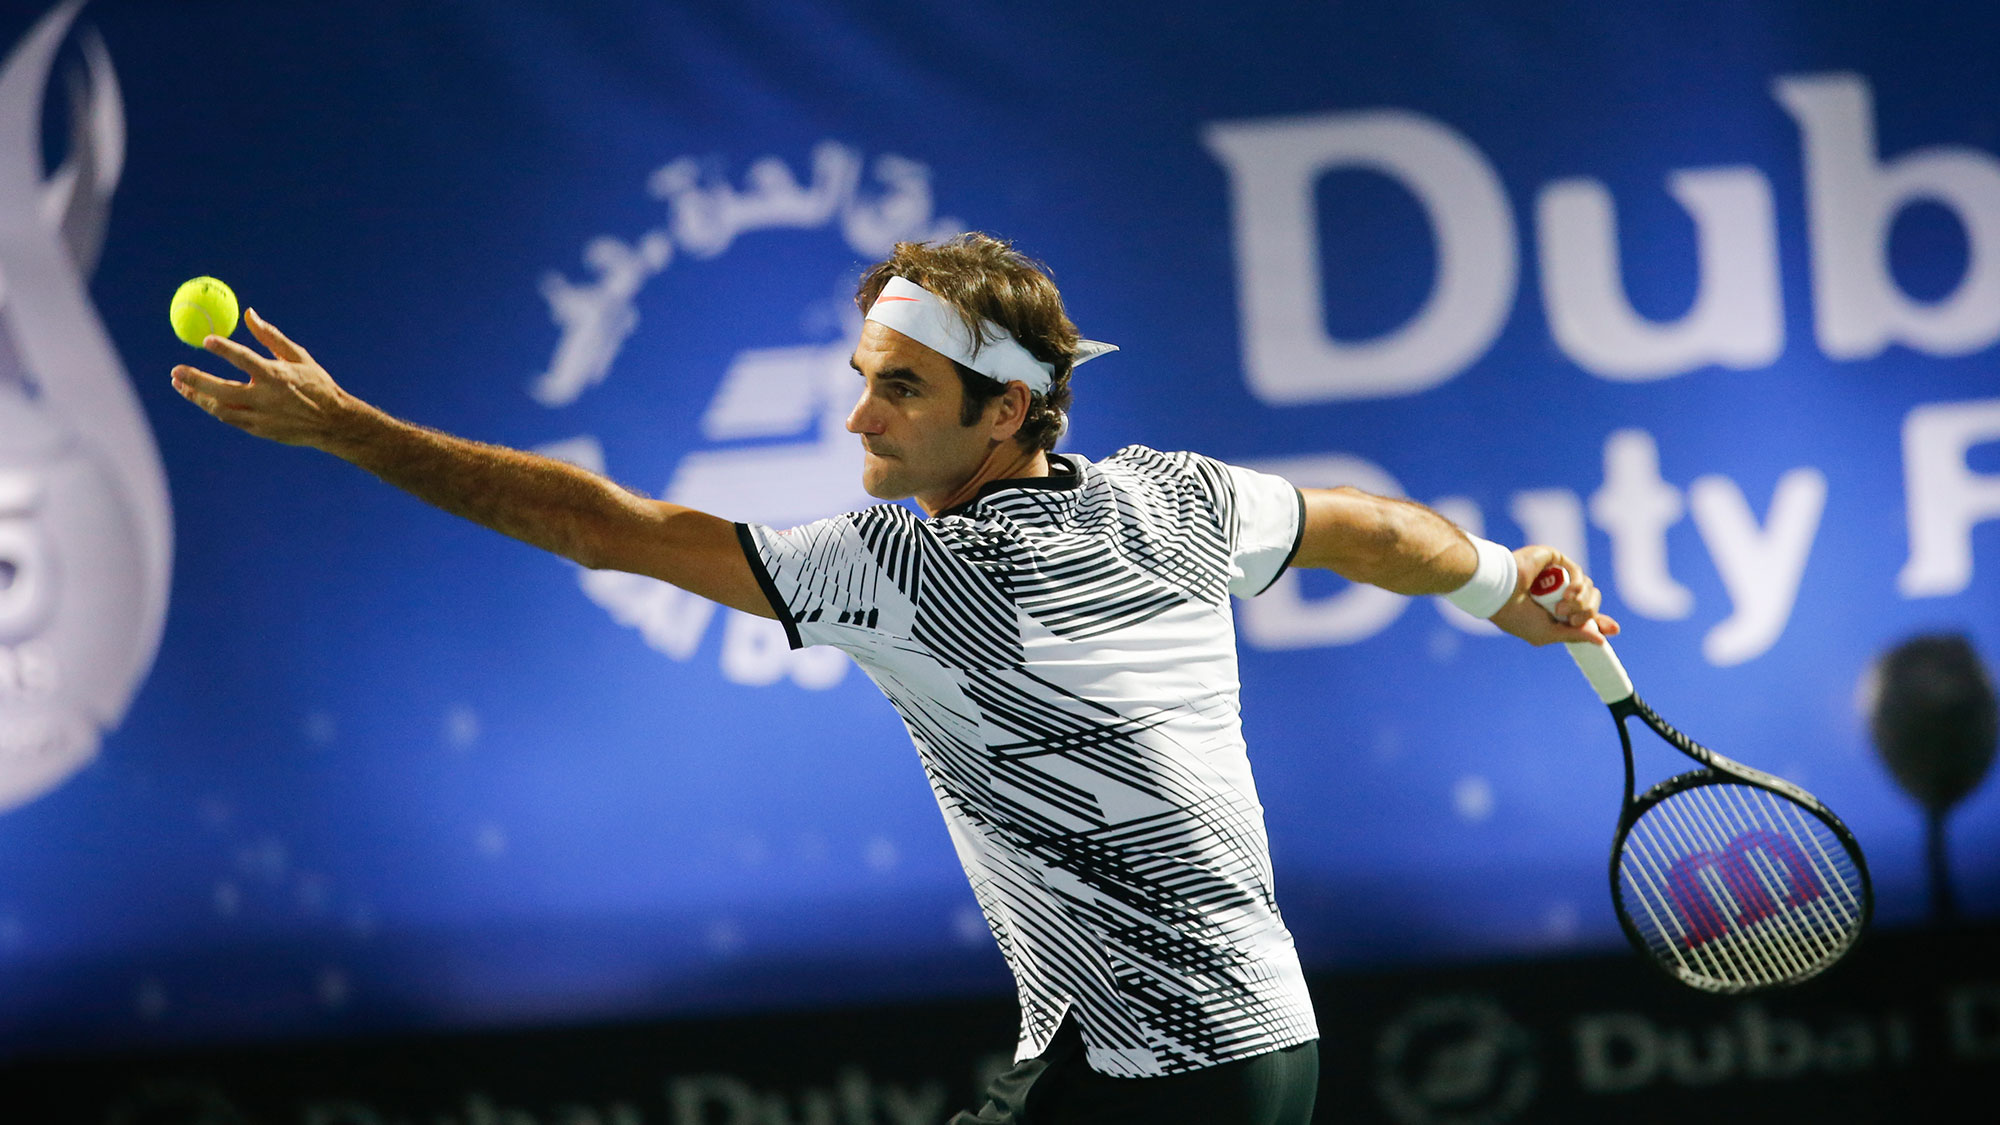 Federer, Lead Top for the Dubai Duty Free Tennis Championships 2019 - Dubai Duty Free Tennis Championships